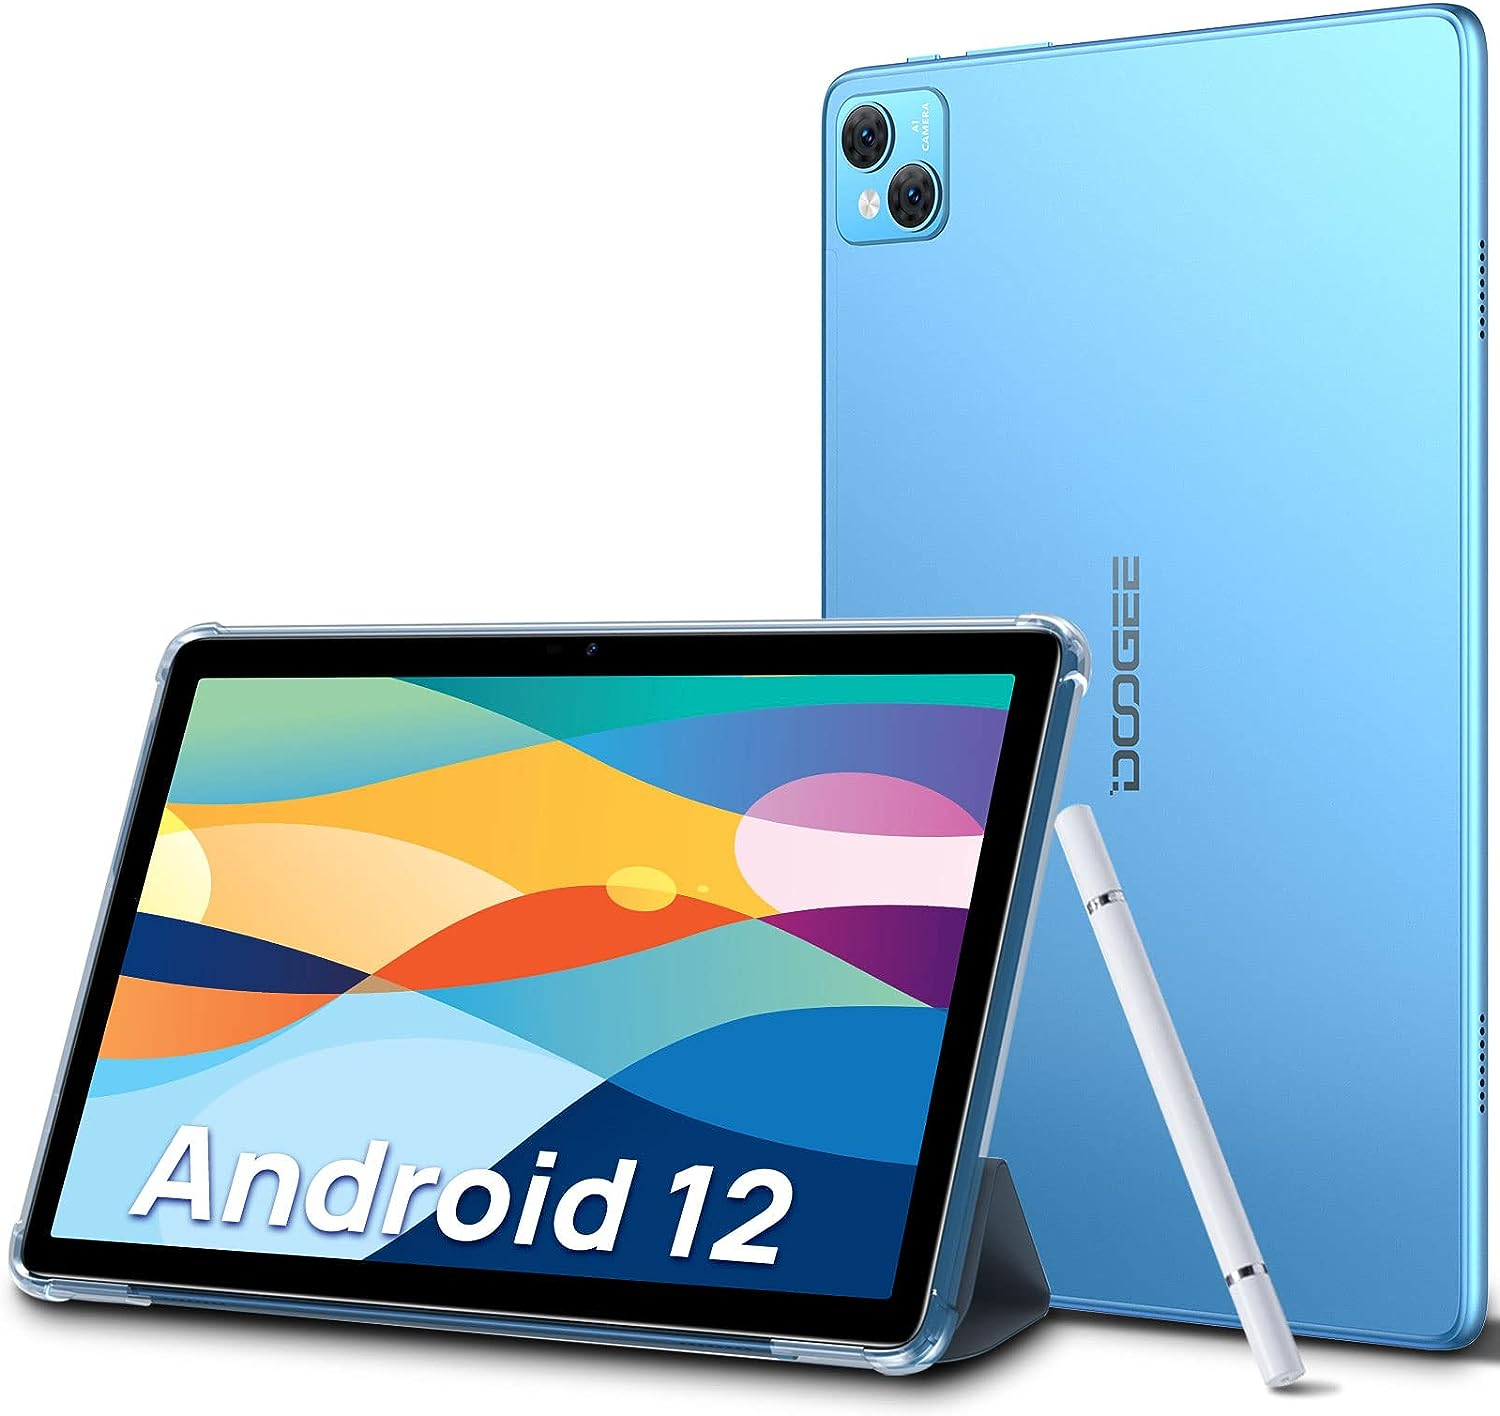 Zoll, 128 Blau 4G 8300mAh 10,1 Android Tablet, DOOGEE 15GB+128GB T10 GB, 12,